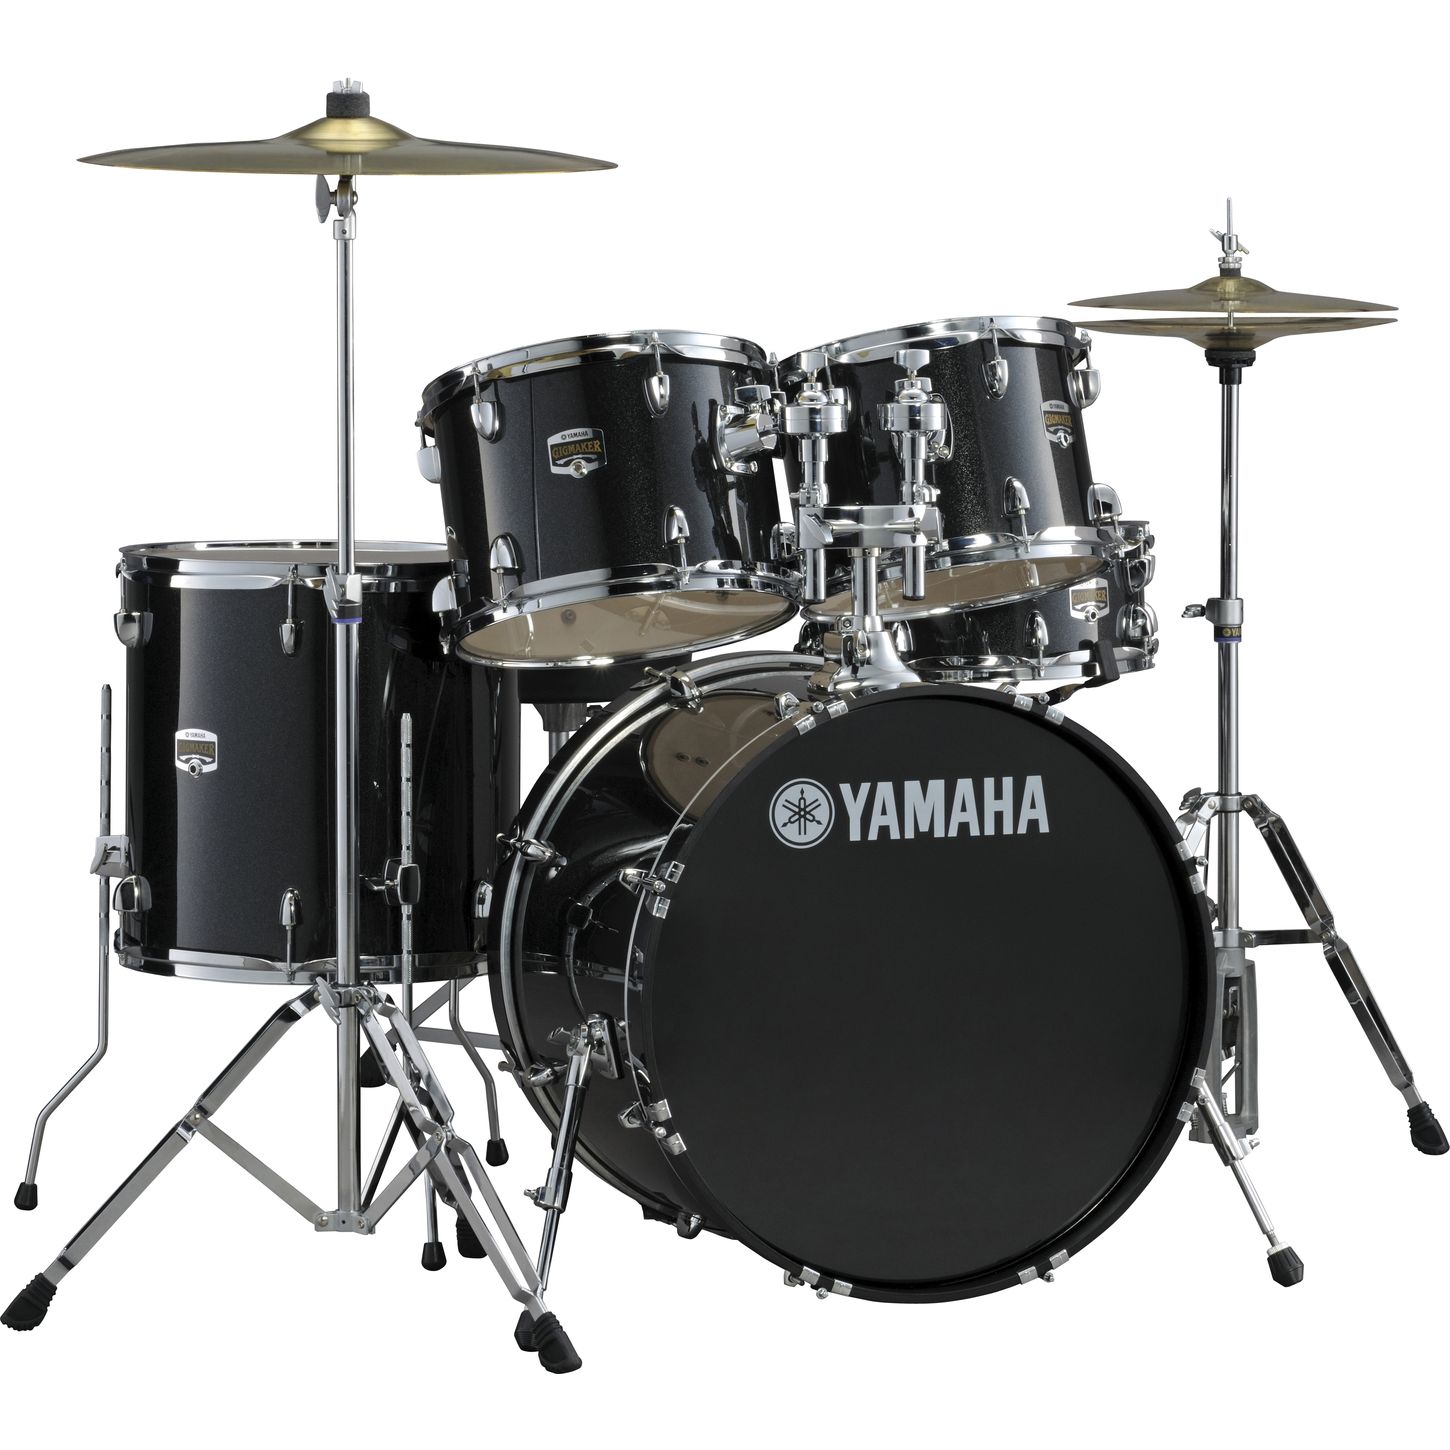  Gigmaker 5Piece Standard Drum Set with 22quot; Bass Drum Black Glitter